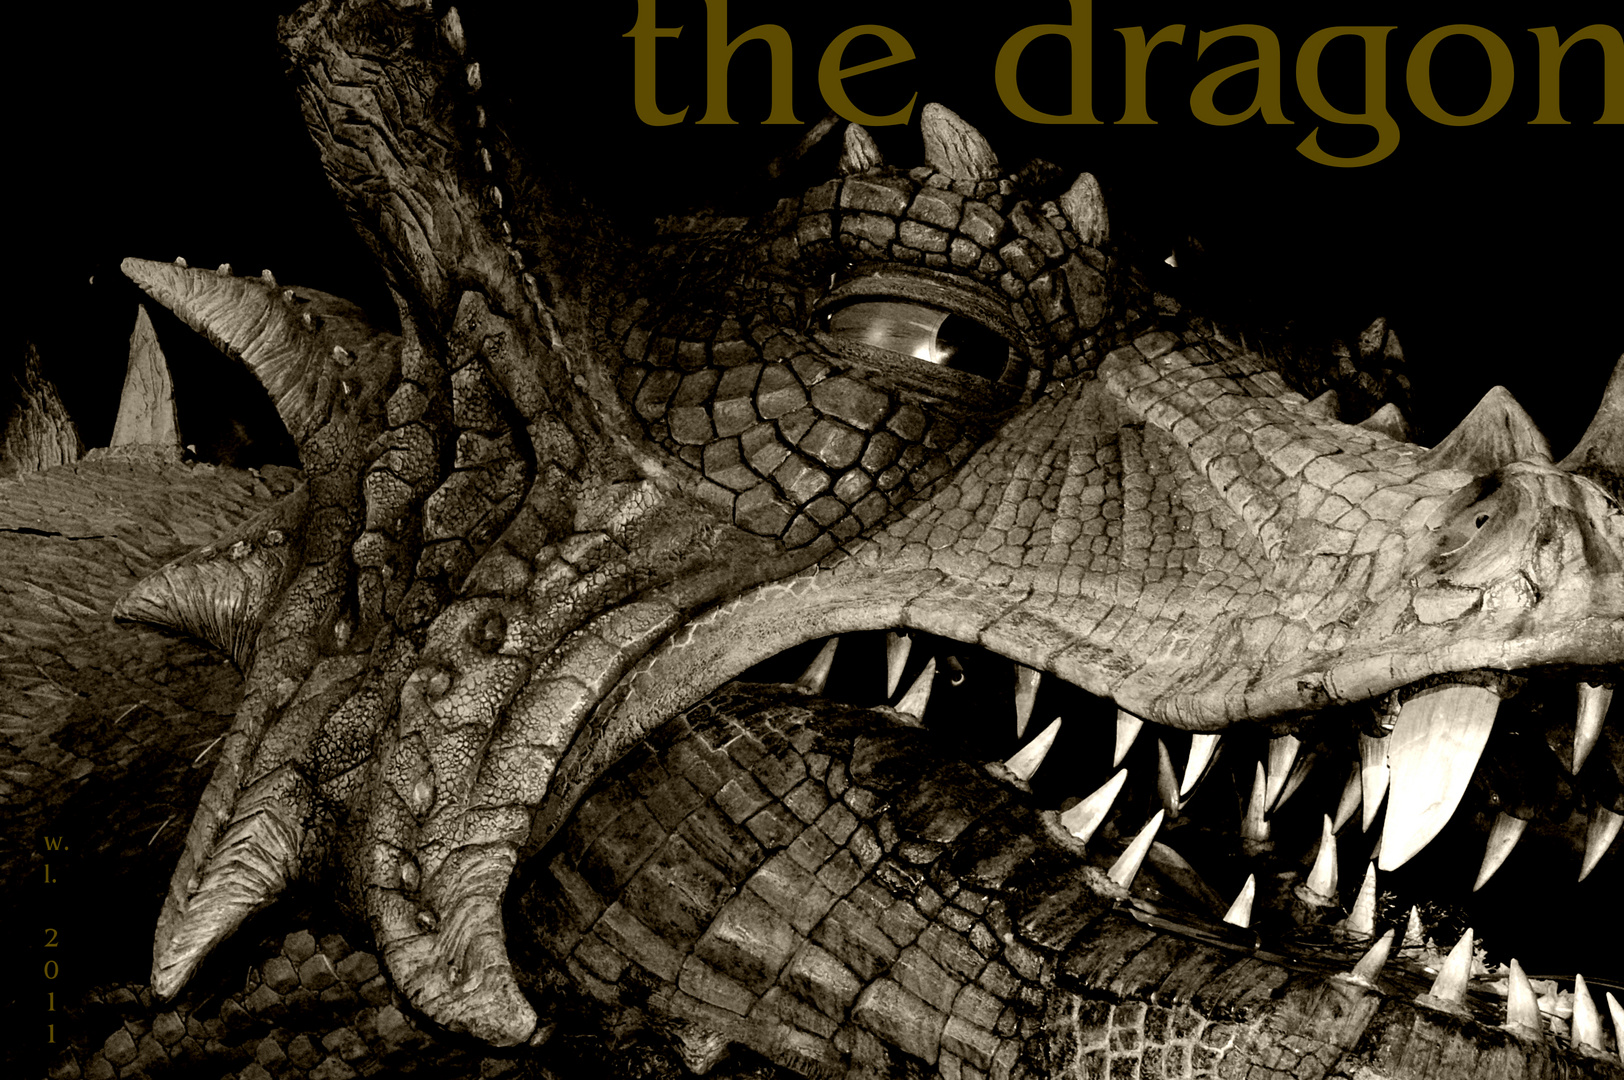 == the dragon ==